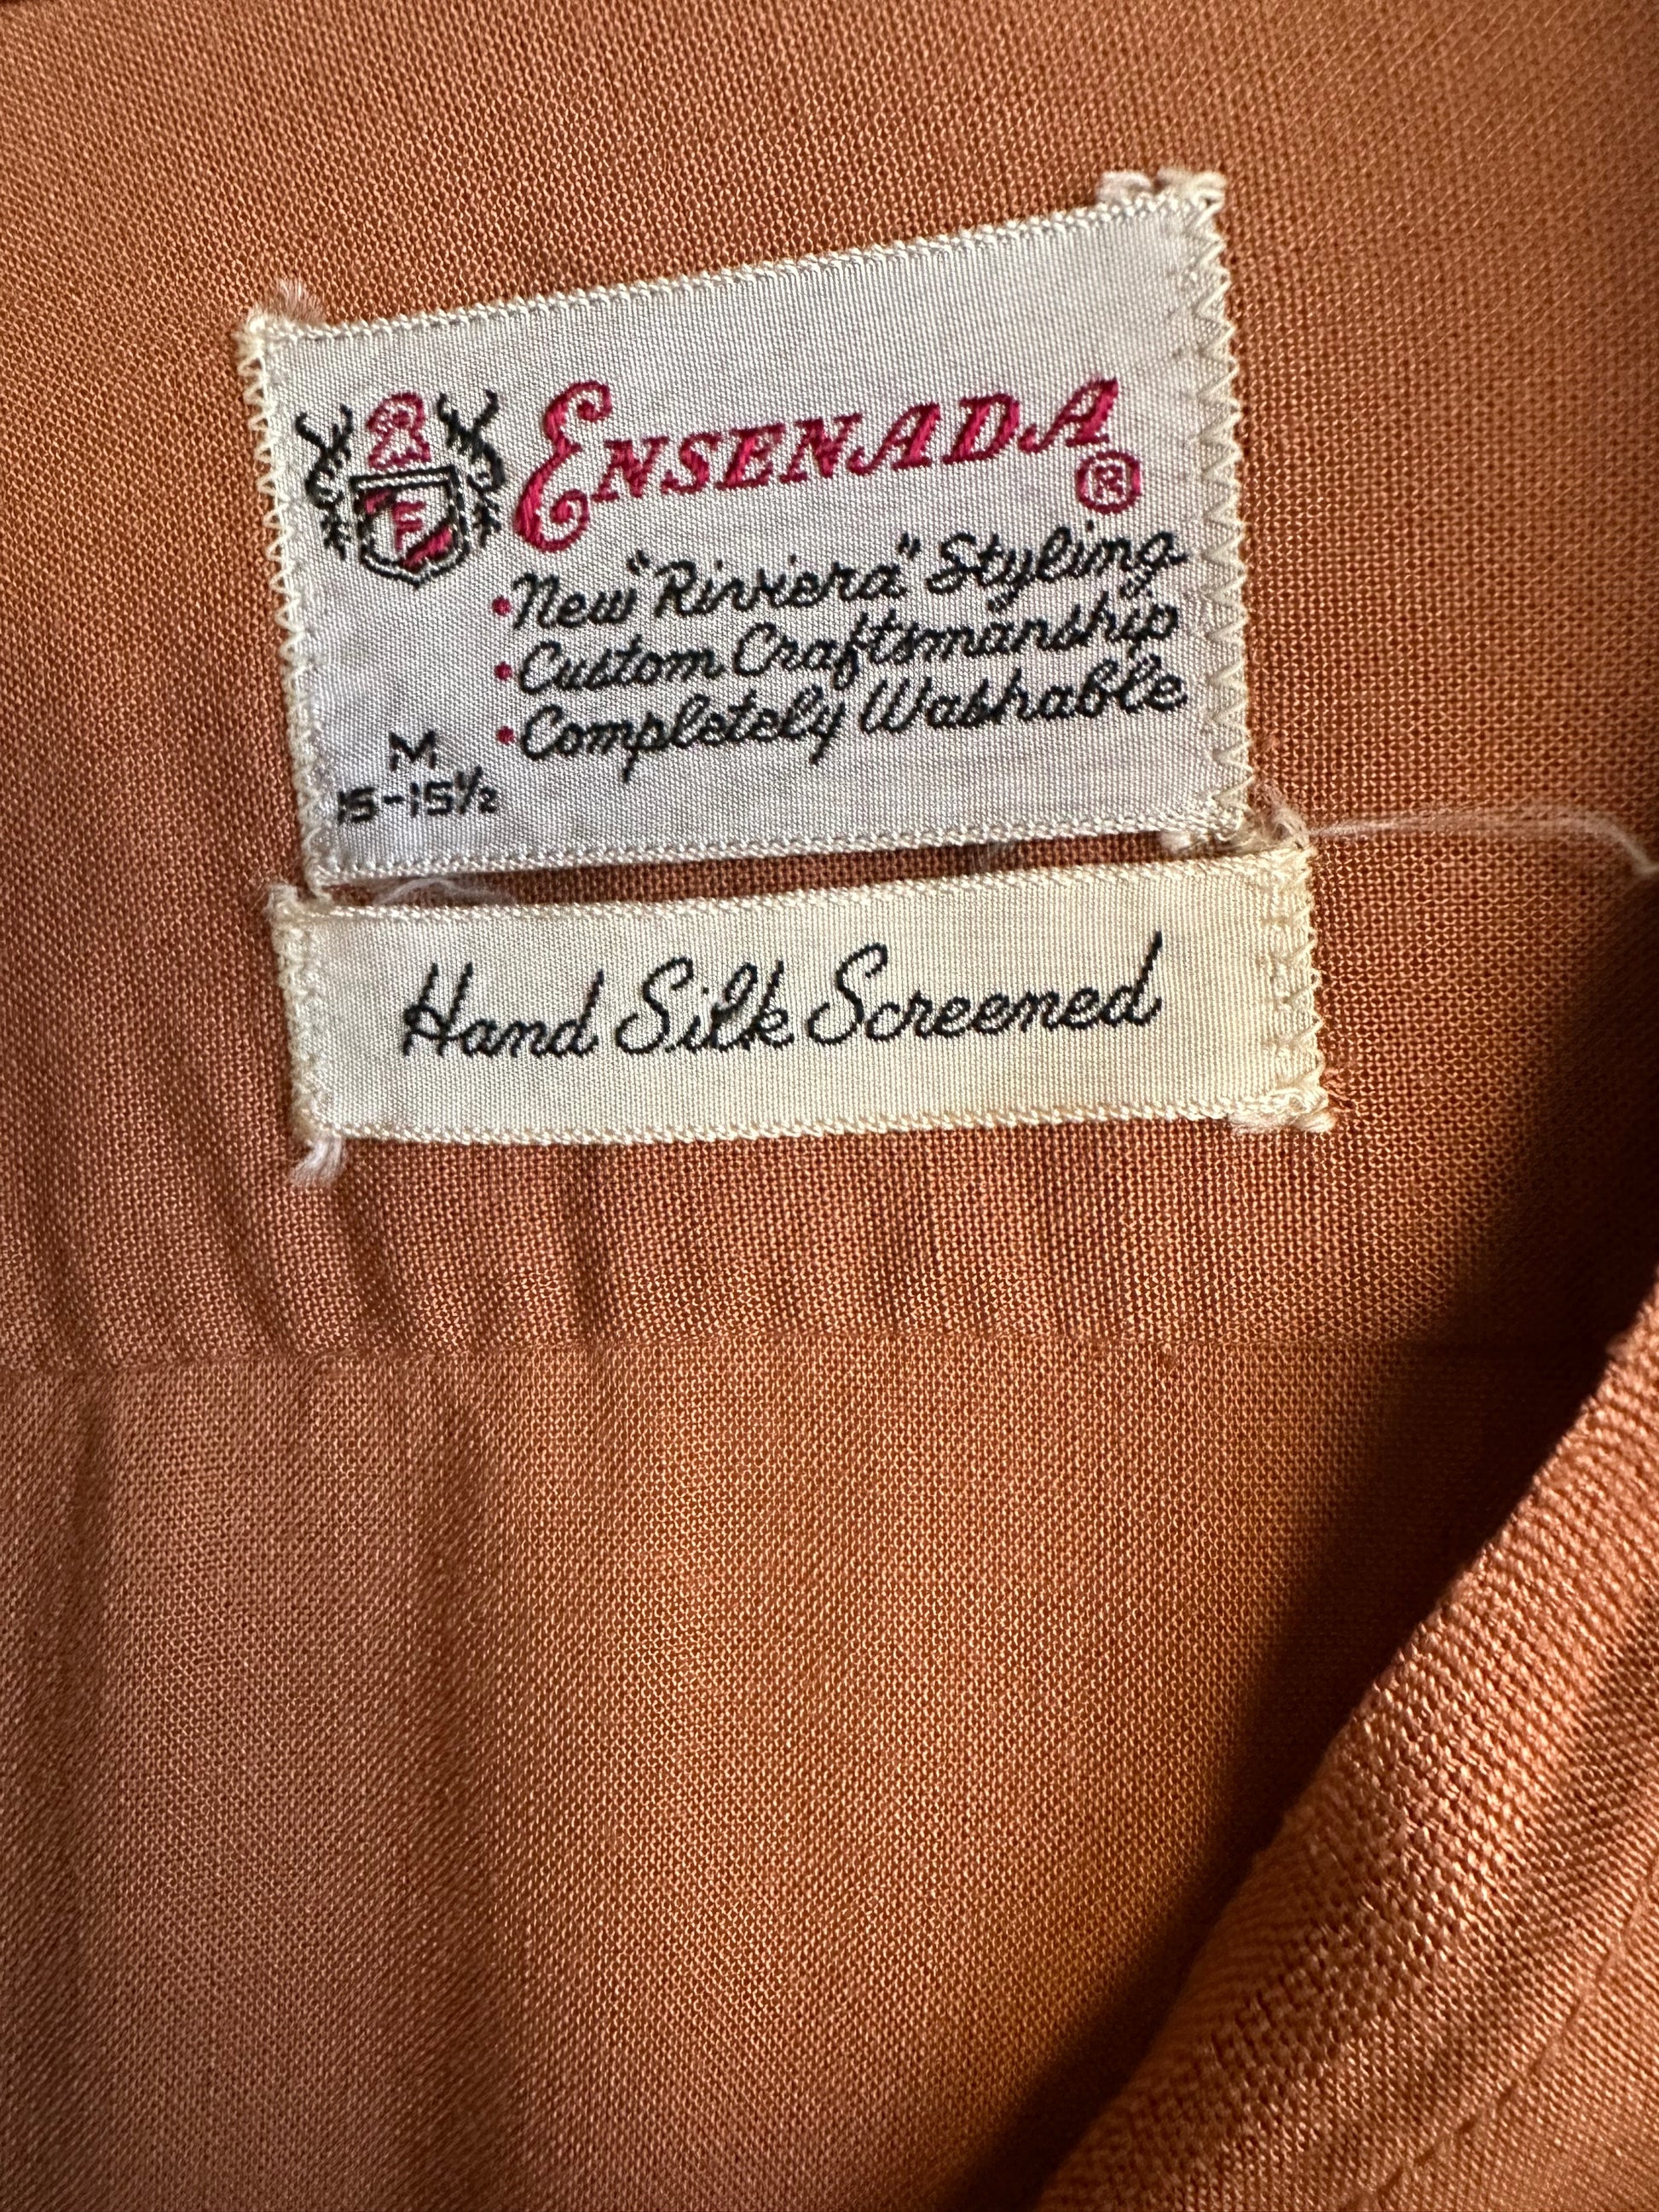 tag detail- enseanada , new riveiera styling. Custom craftsmanship. Completely Washable. Hand Silk Screened. M 15-15 1/2